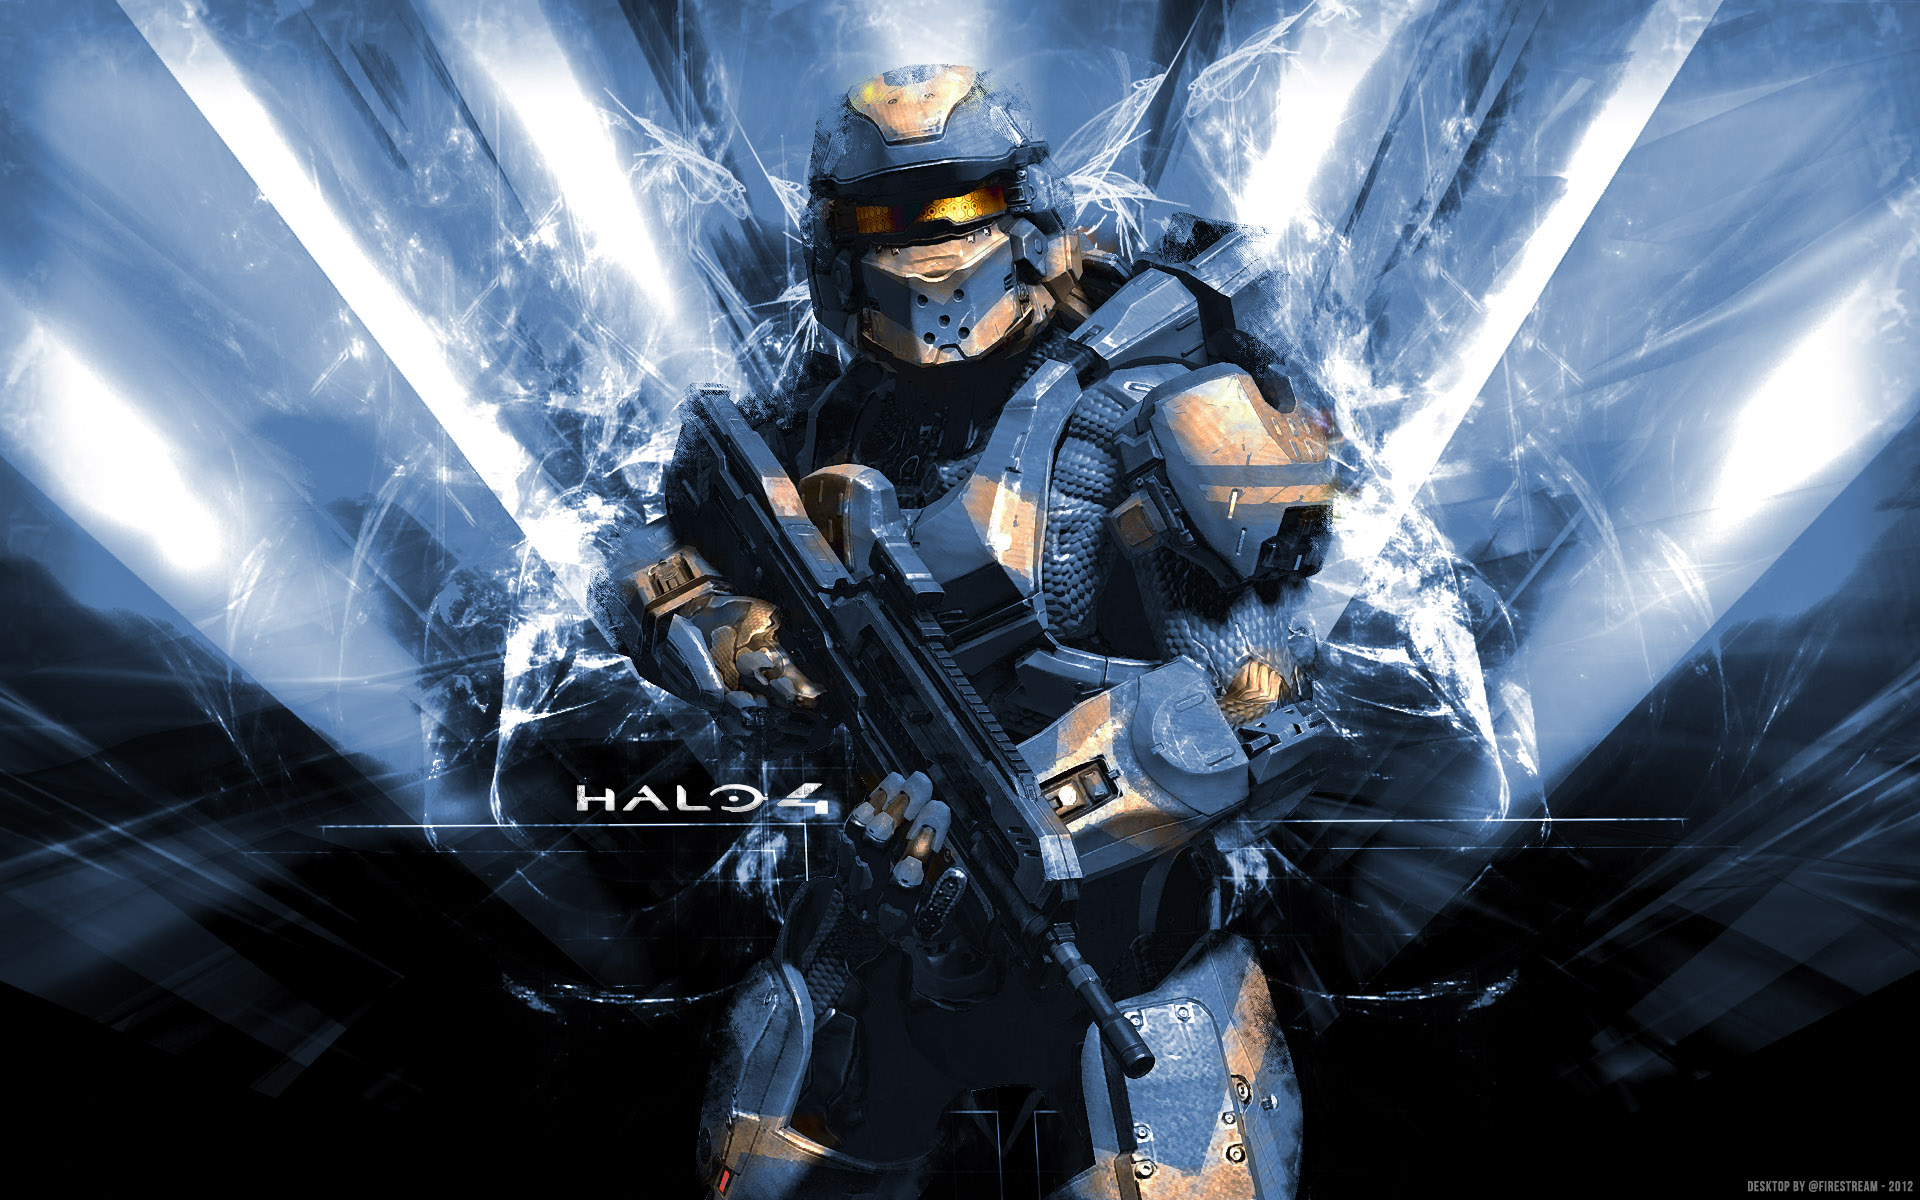 47+] Free Halo 4 Wallpaper - WallpaperSafari